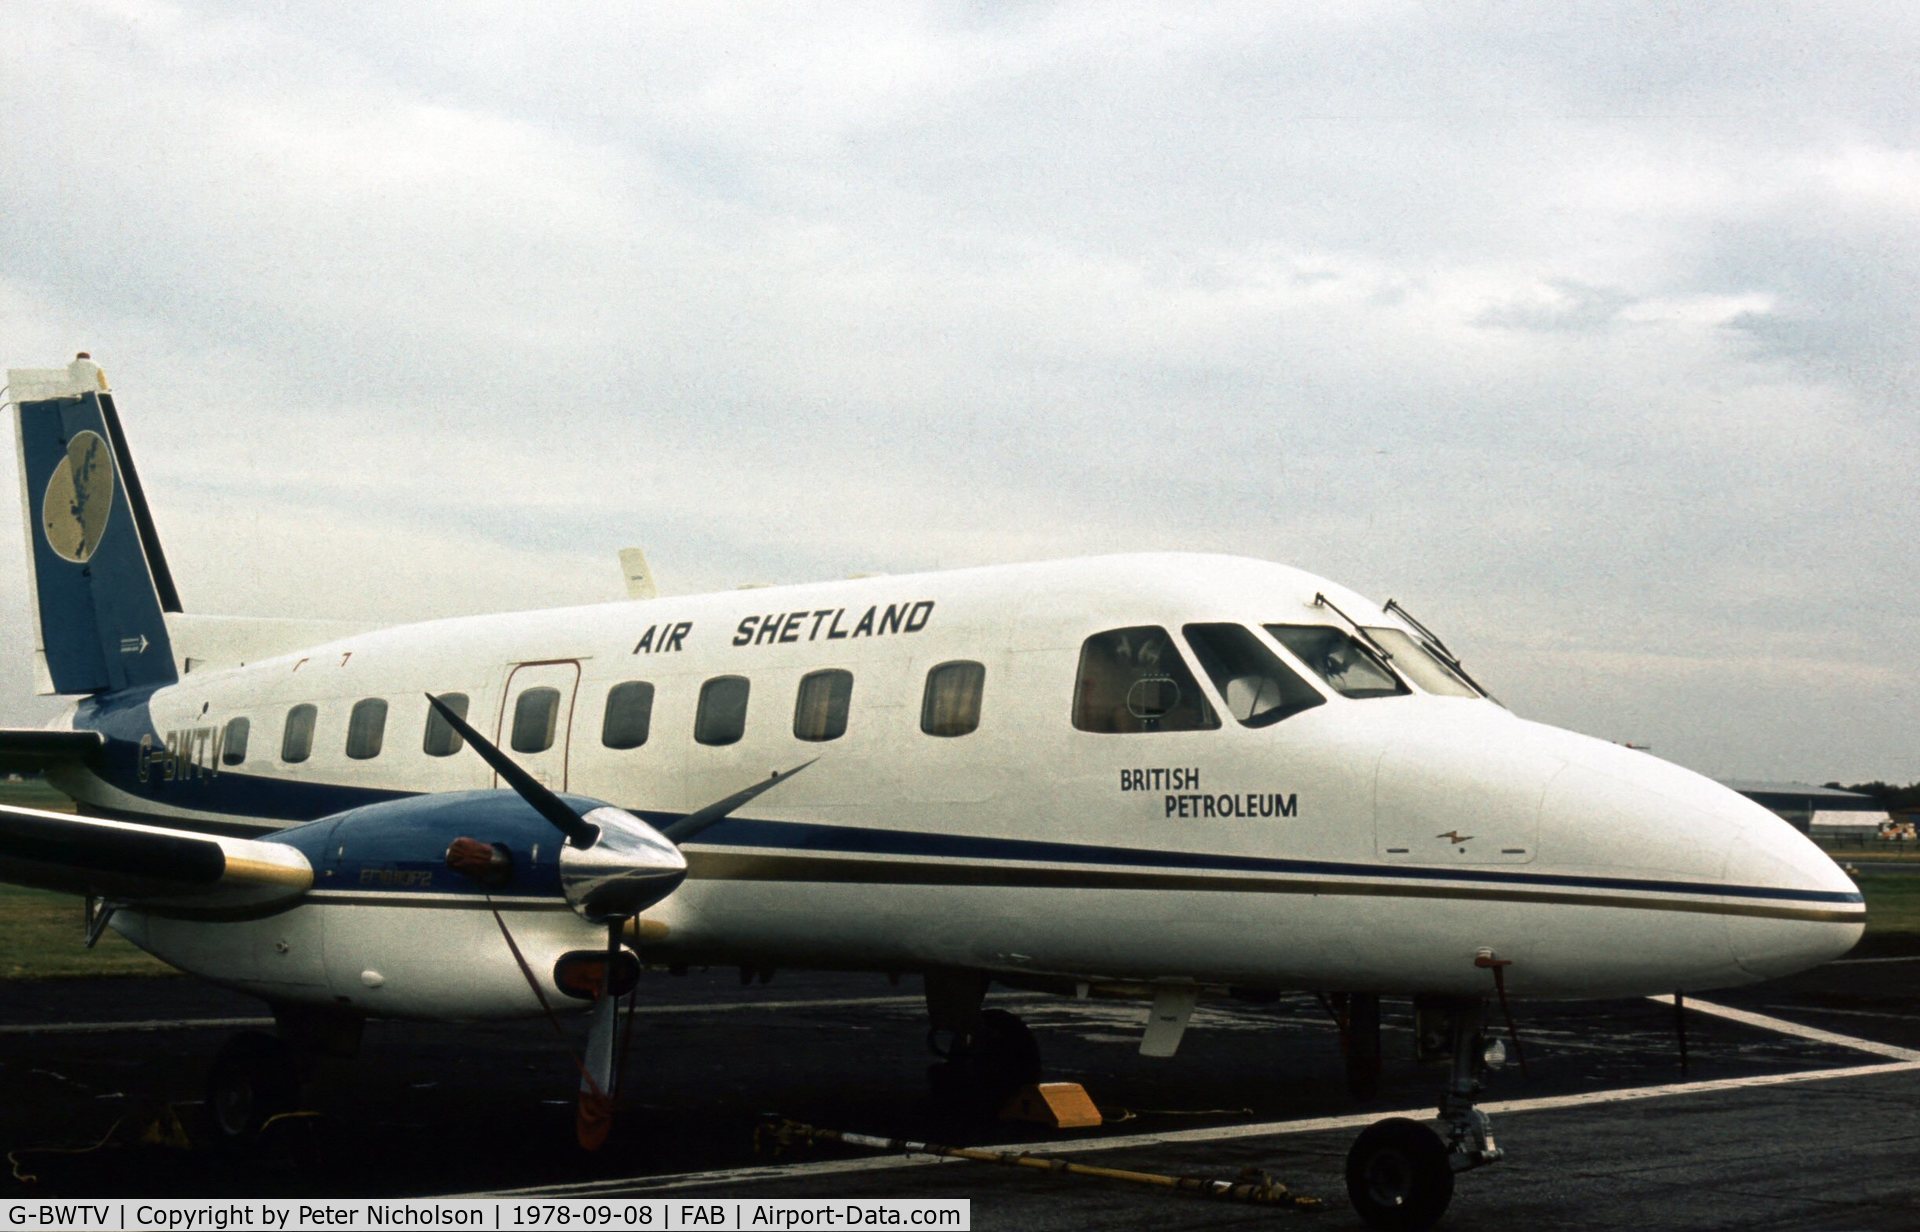 G-BWTV, 1977 Embraer EMB-110P2 Bandeirante C/N 110153, EMB-110 Bandeirante on display at the 1978 Farnborough Airshow.